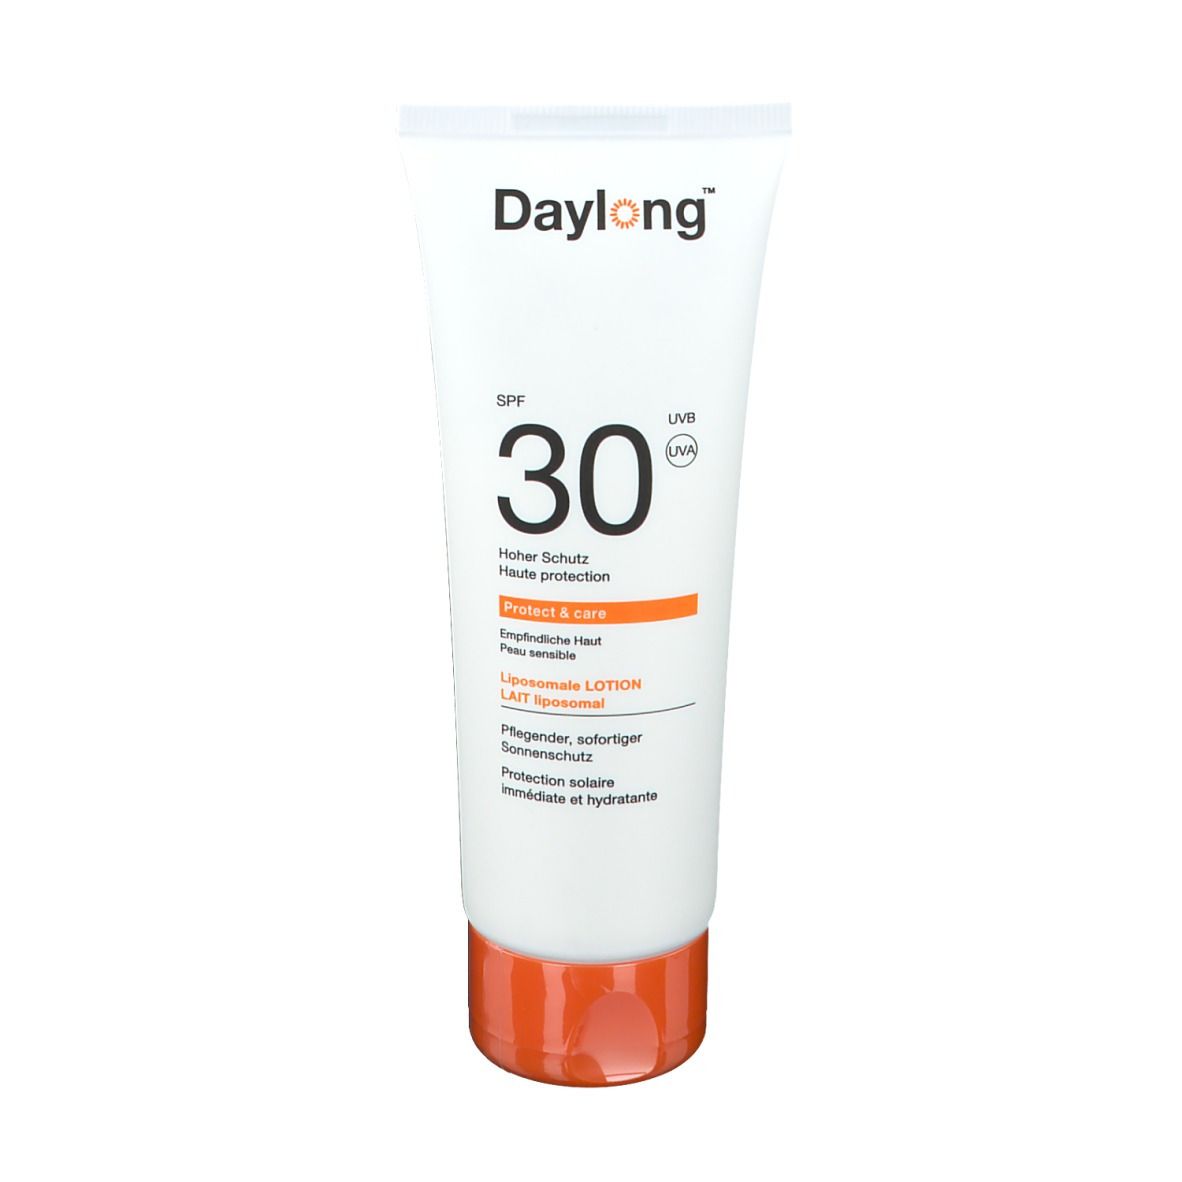 Daylong™ Protect & care SPF 30 Lait liposomal ml lait